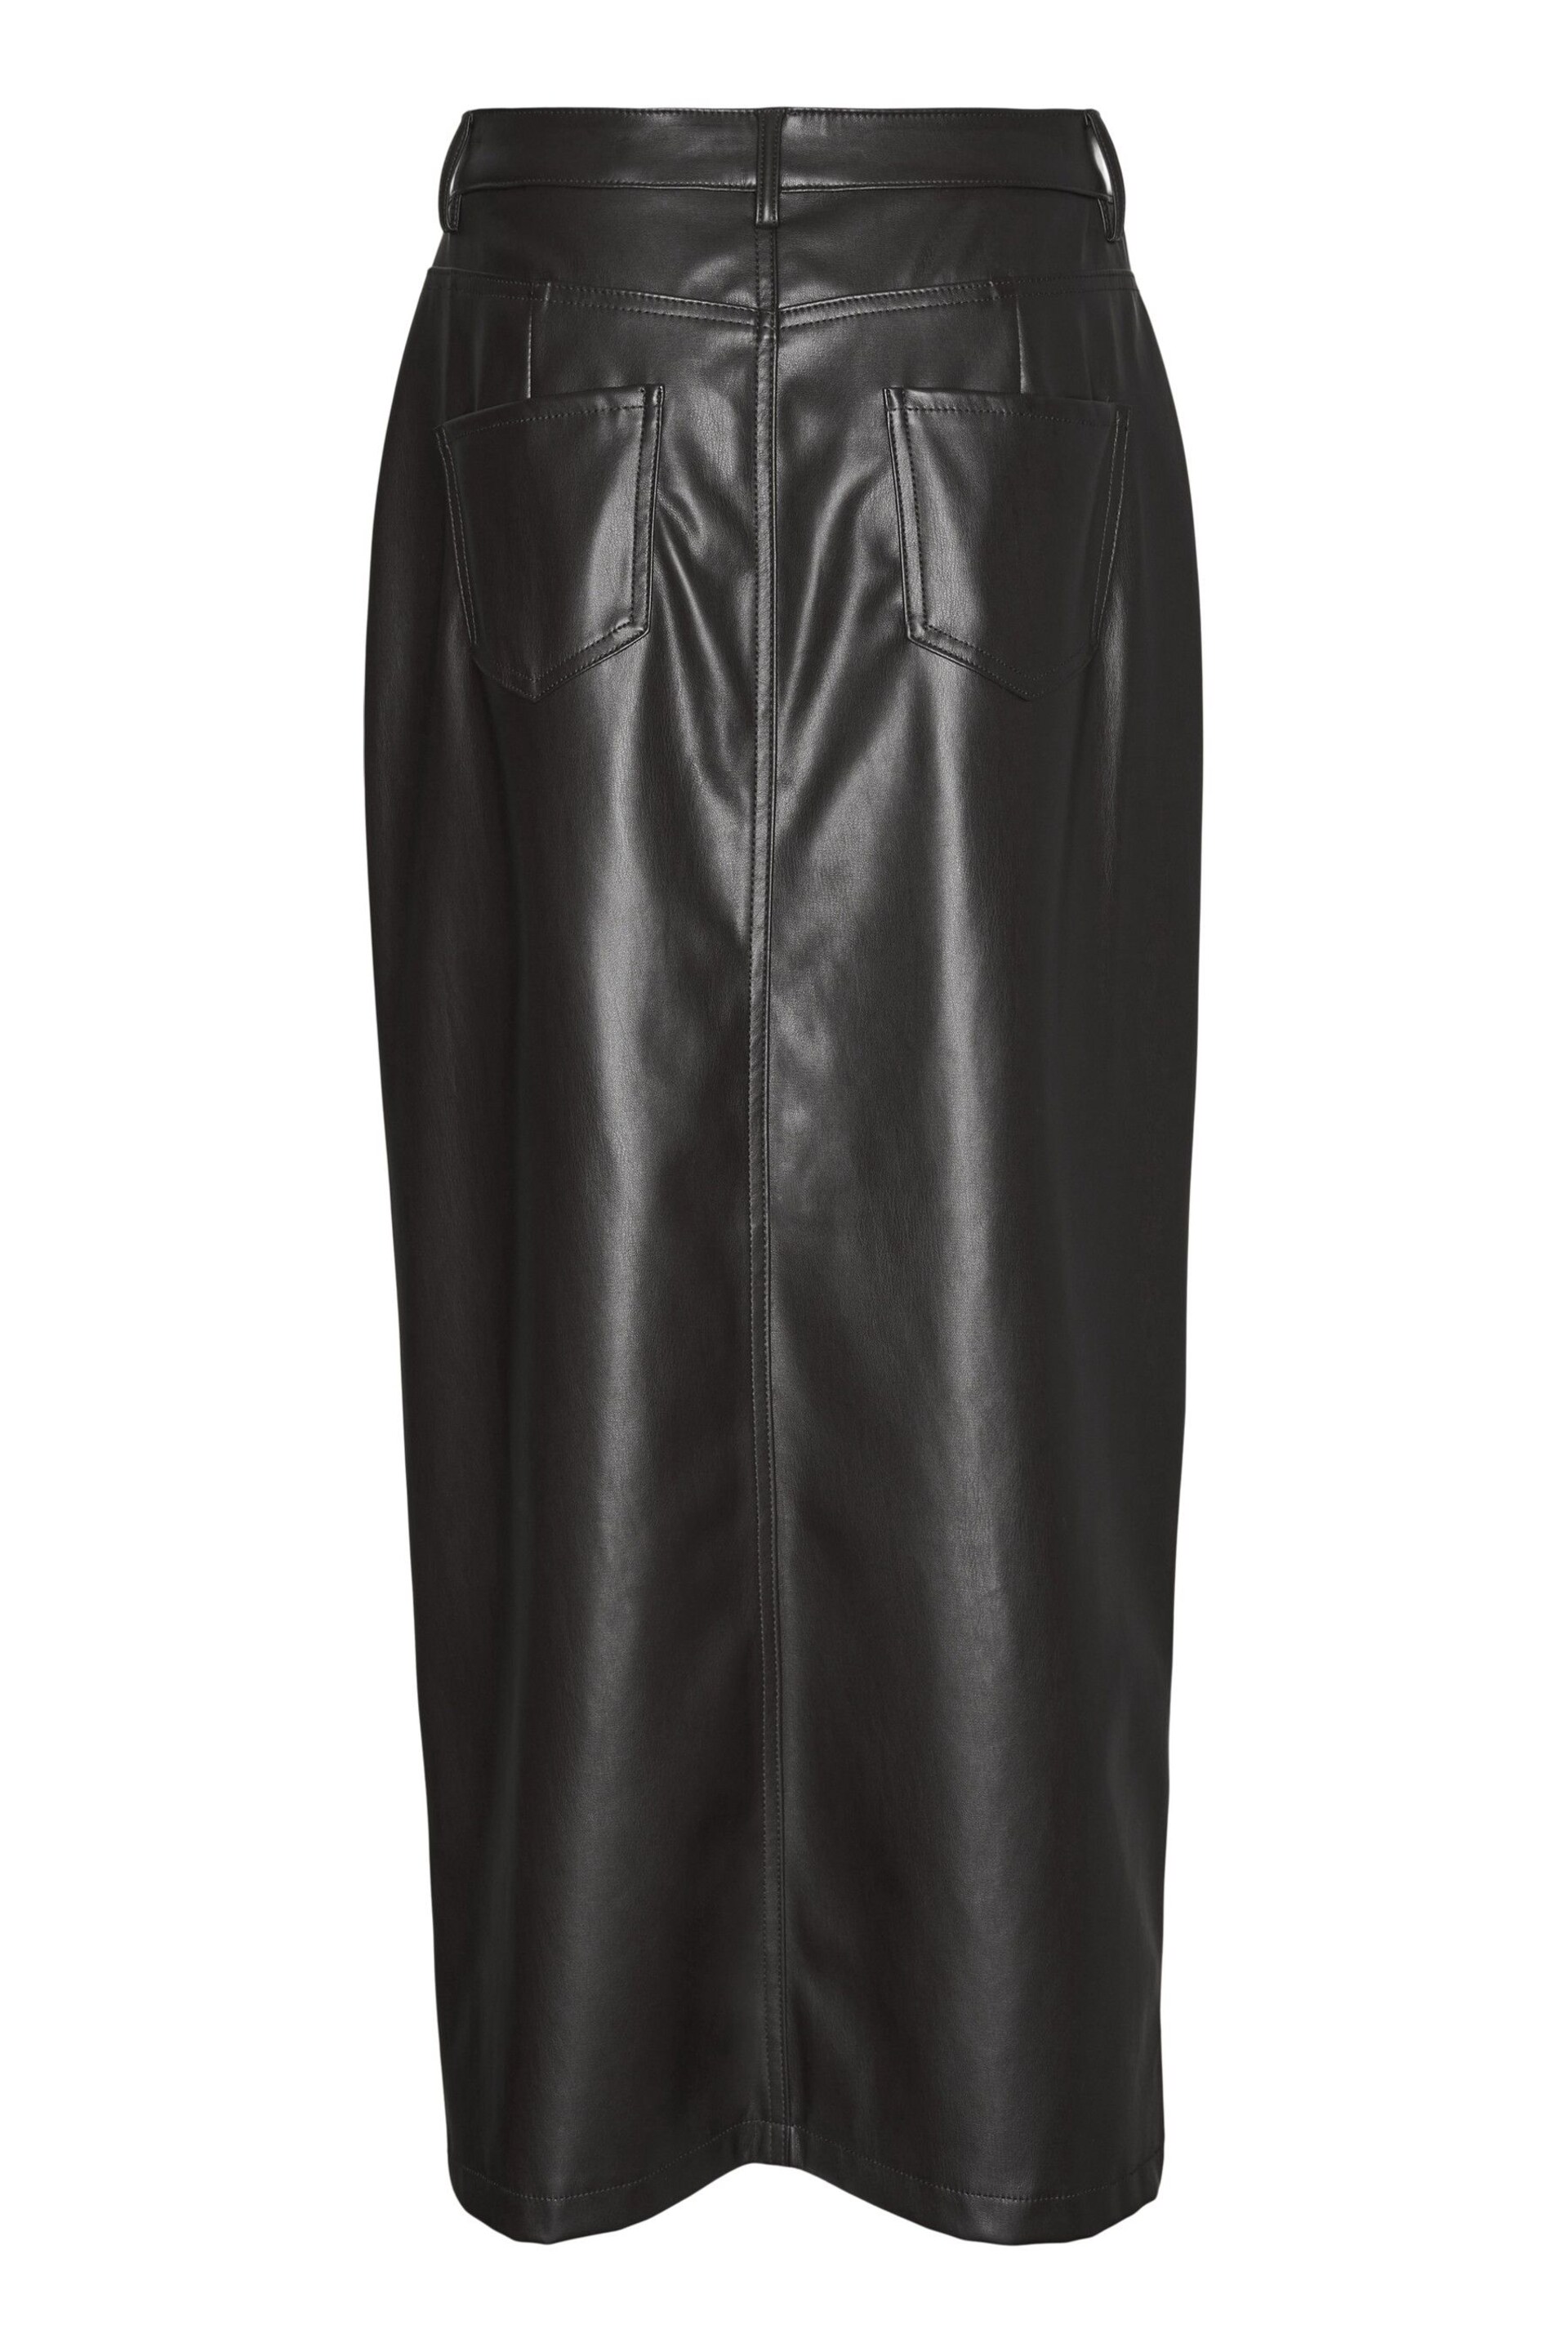 VERO MODA Brown Faux Leather Midi Skirt - Image 5 of 7